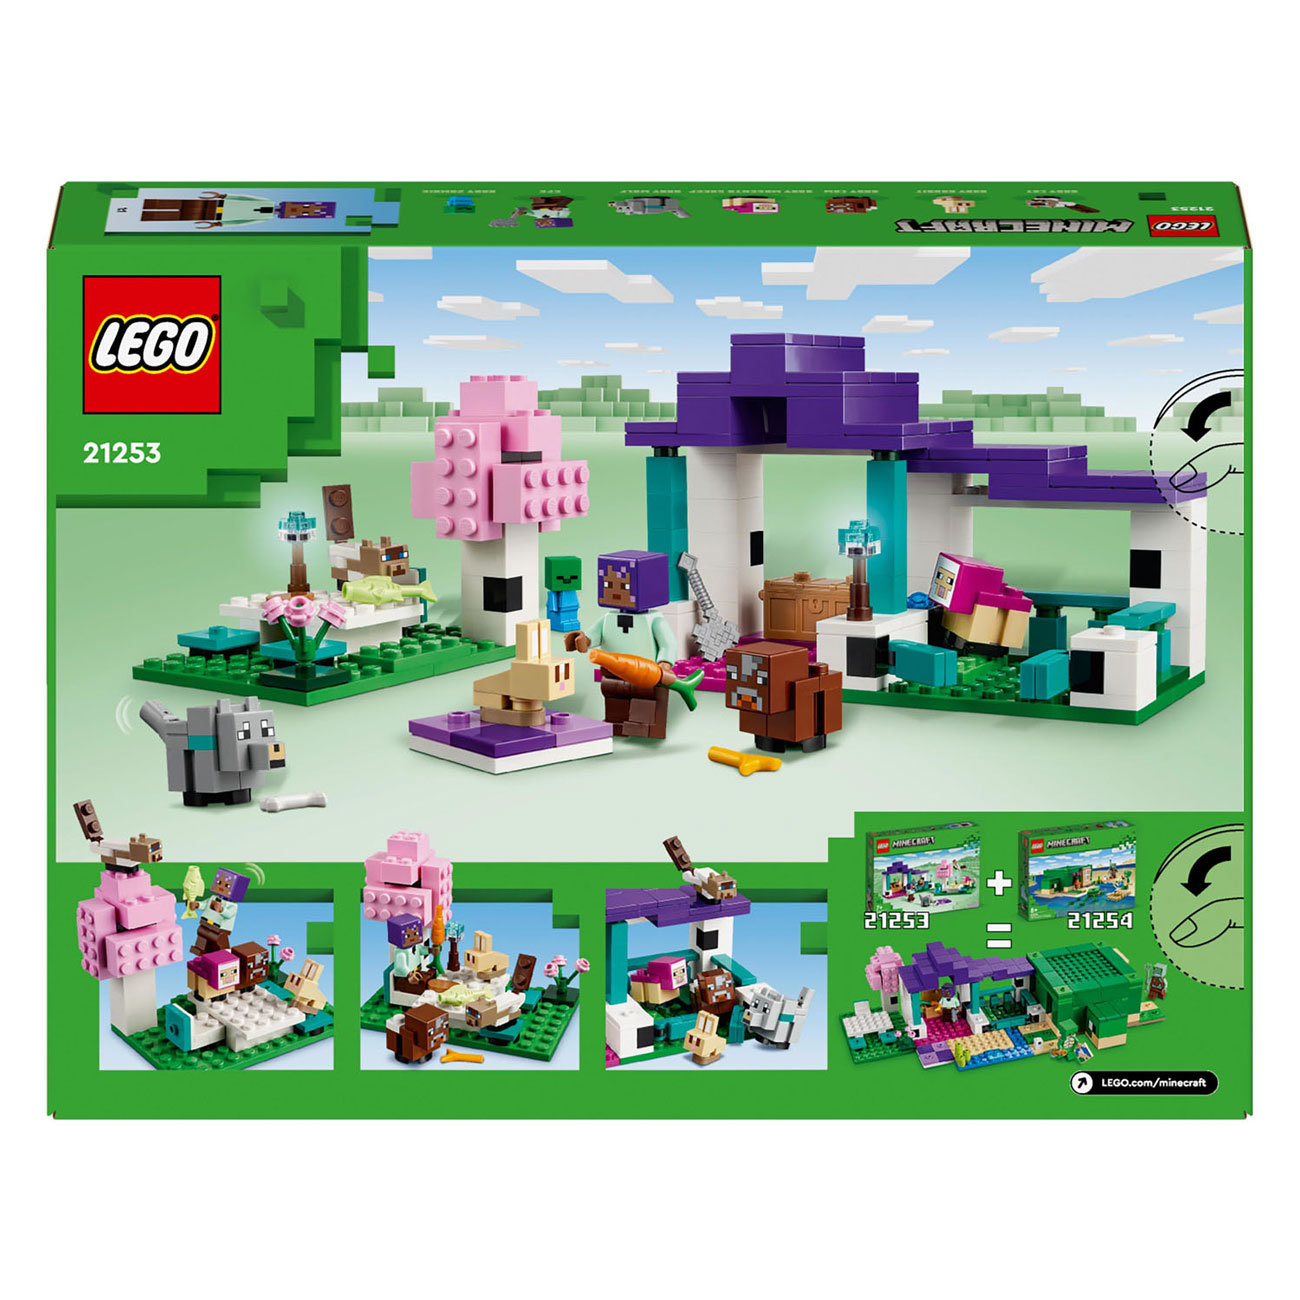 LEGO Minecraft 21253 Le refuge pour animaux